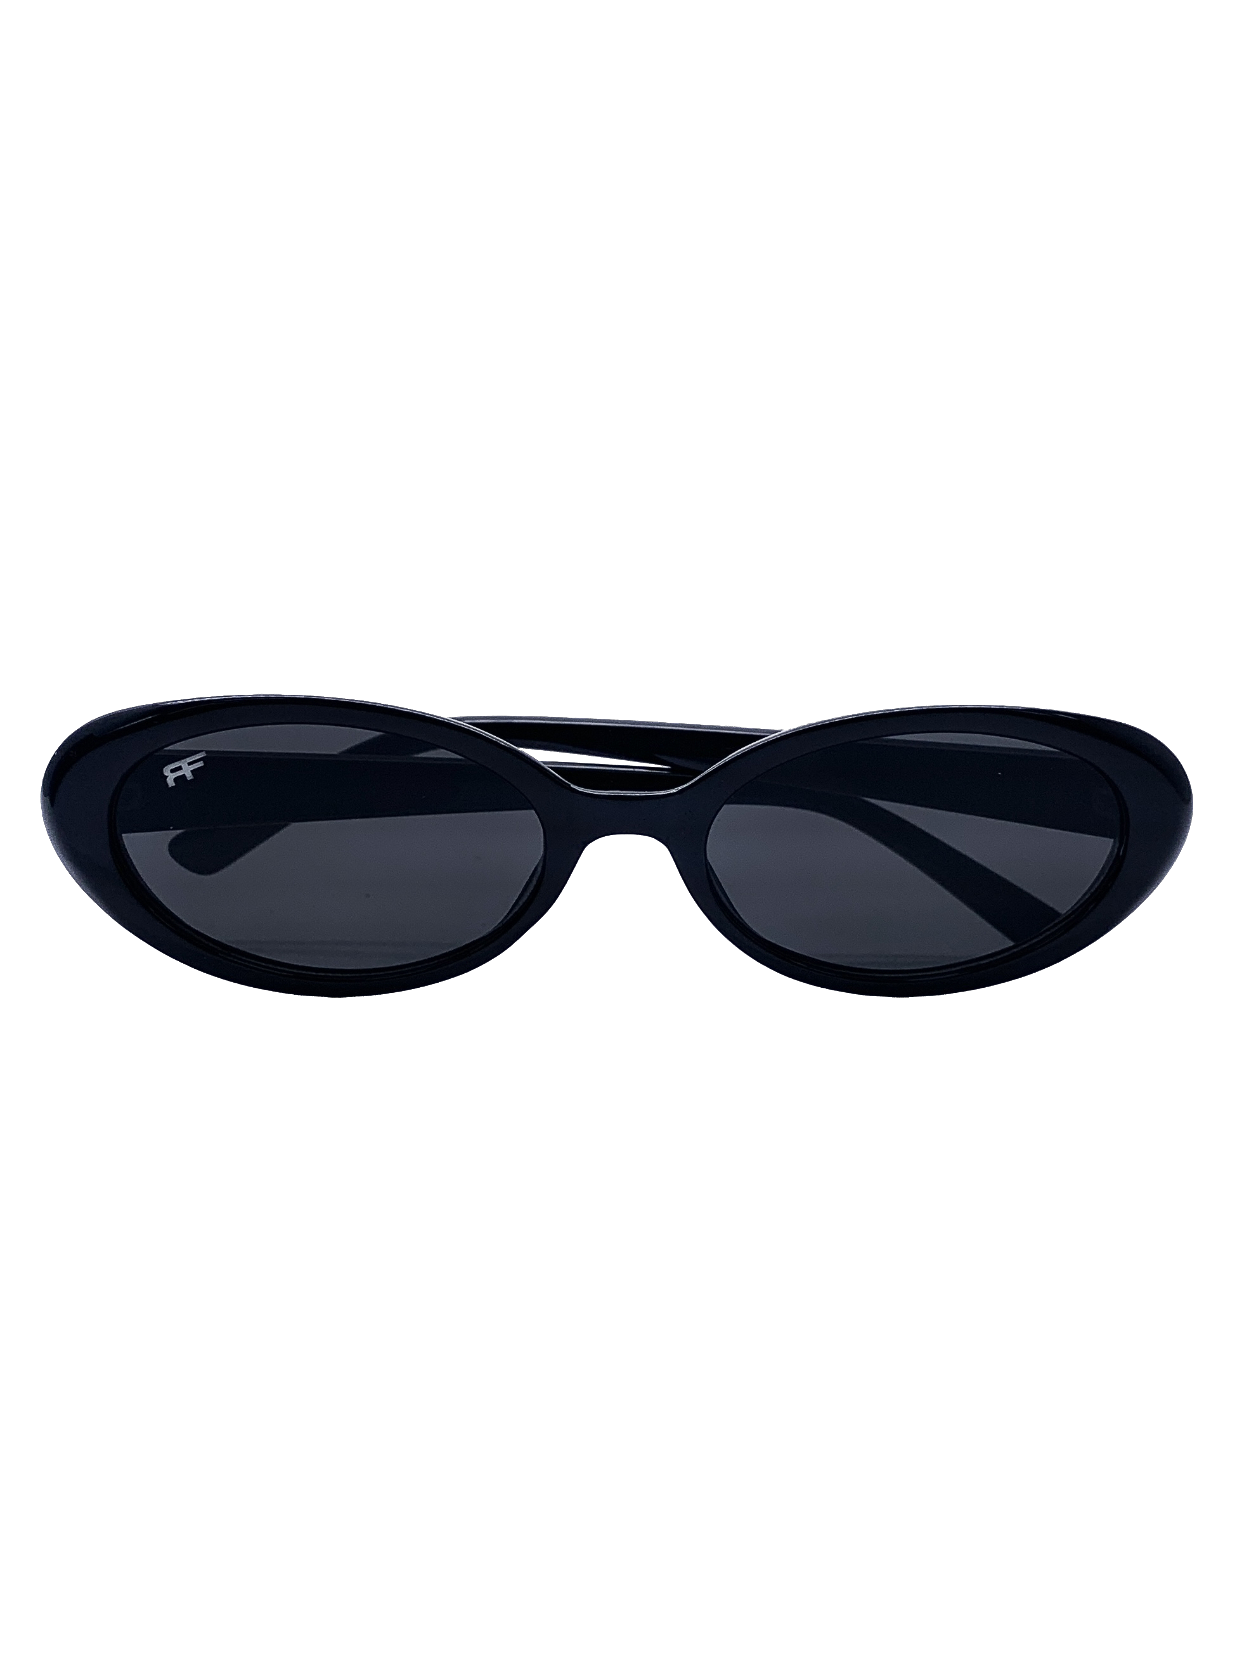 FRNTRO Black Classic 08 Sunglasses One Size